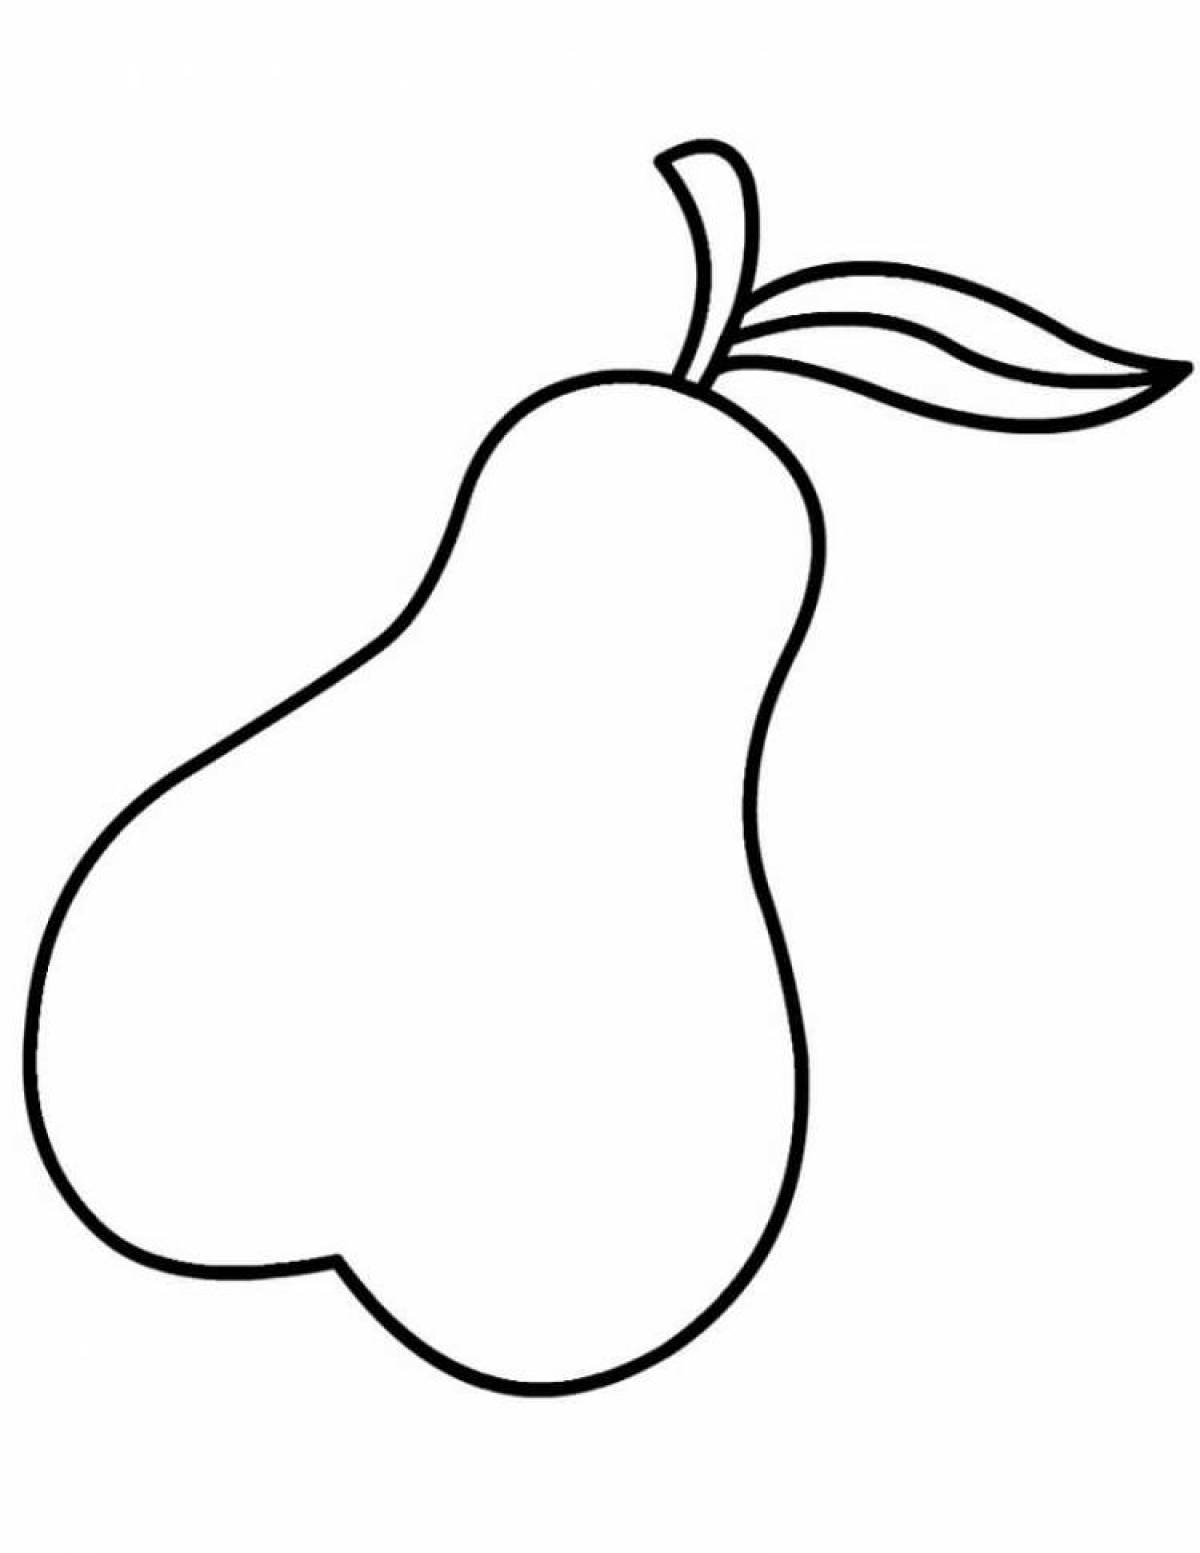 Fun coloring pear for kids